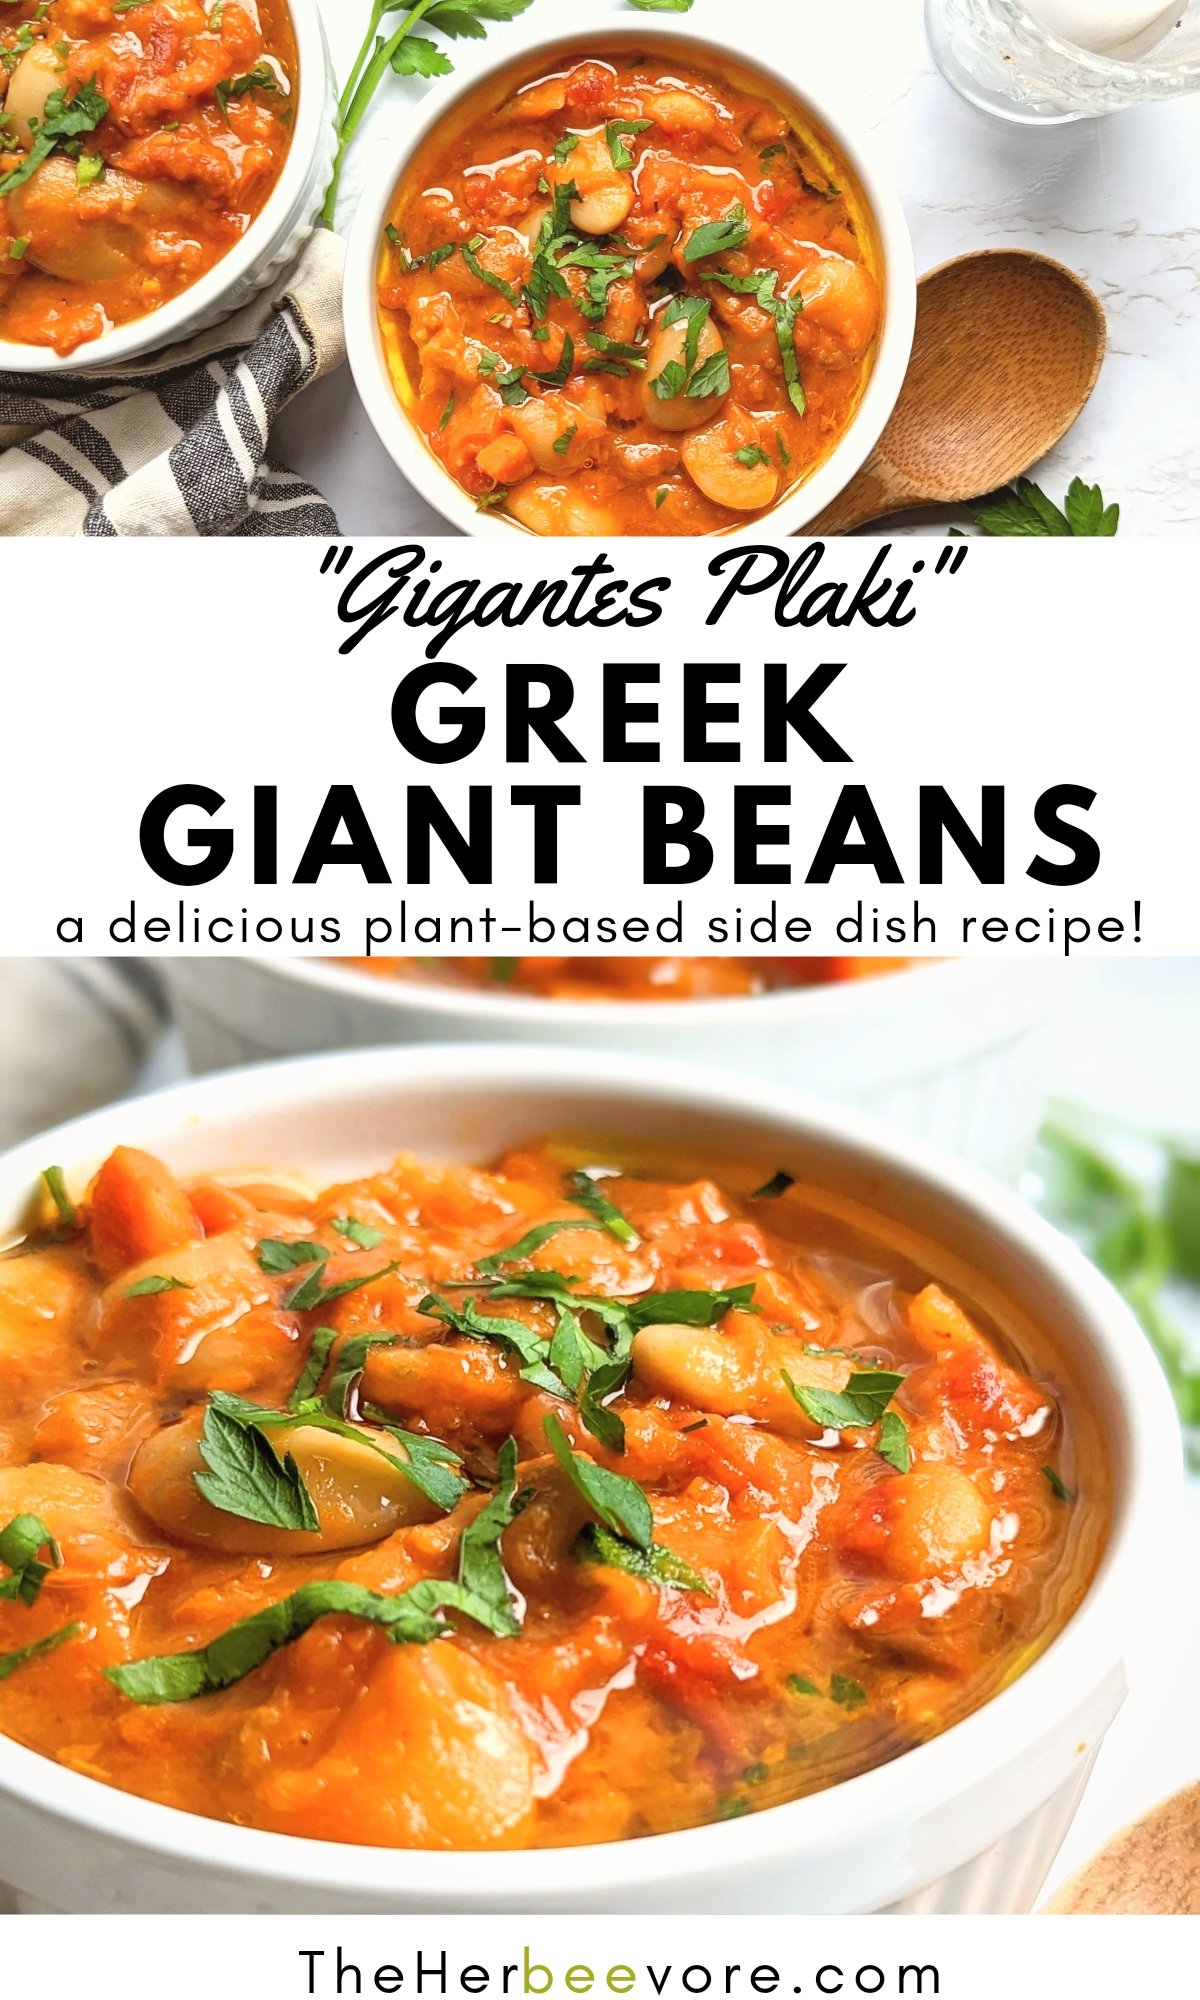 gigantes plaki recipe greek giant beans healthy greek recipes vegan vegetarian dairy free greek recipes